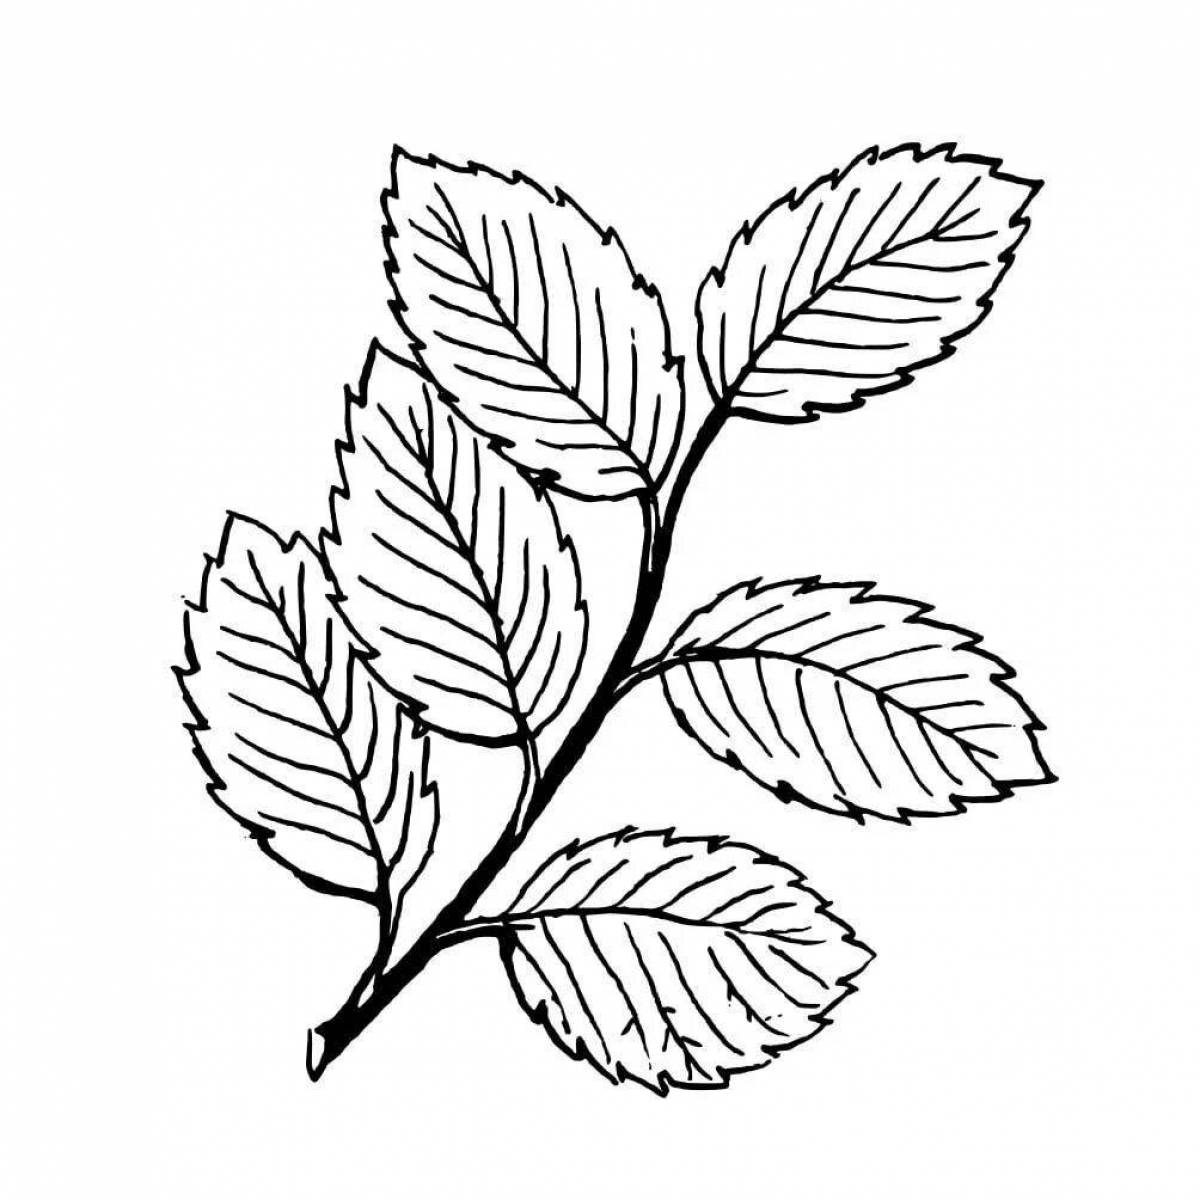 Delightful rowan leaf coloring page